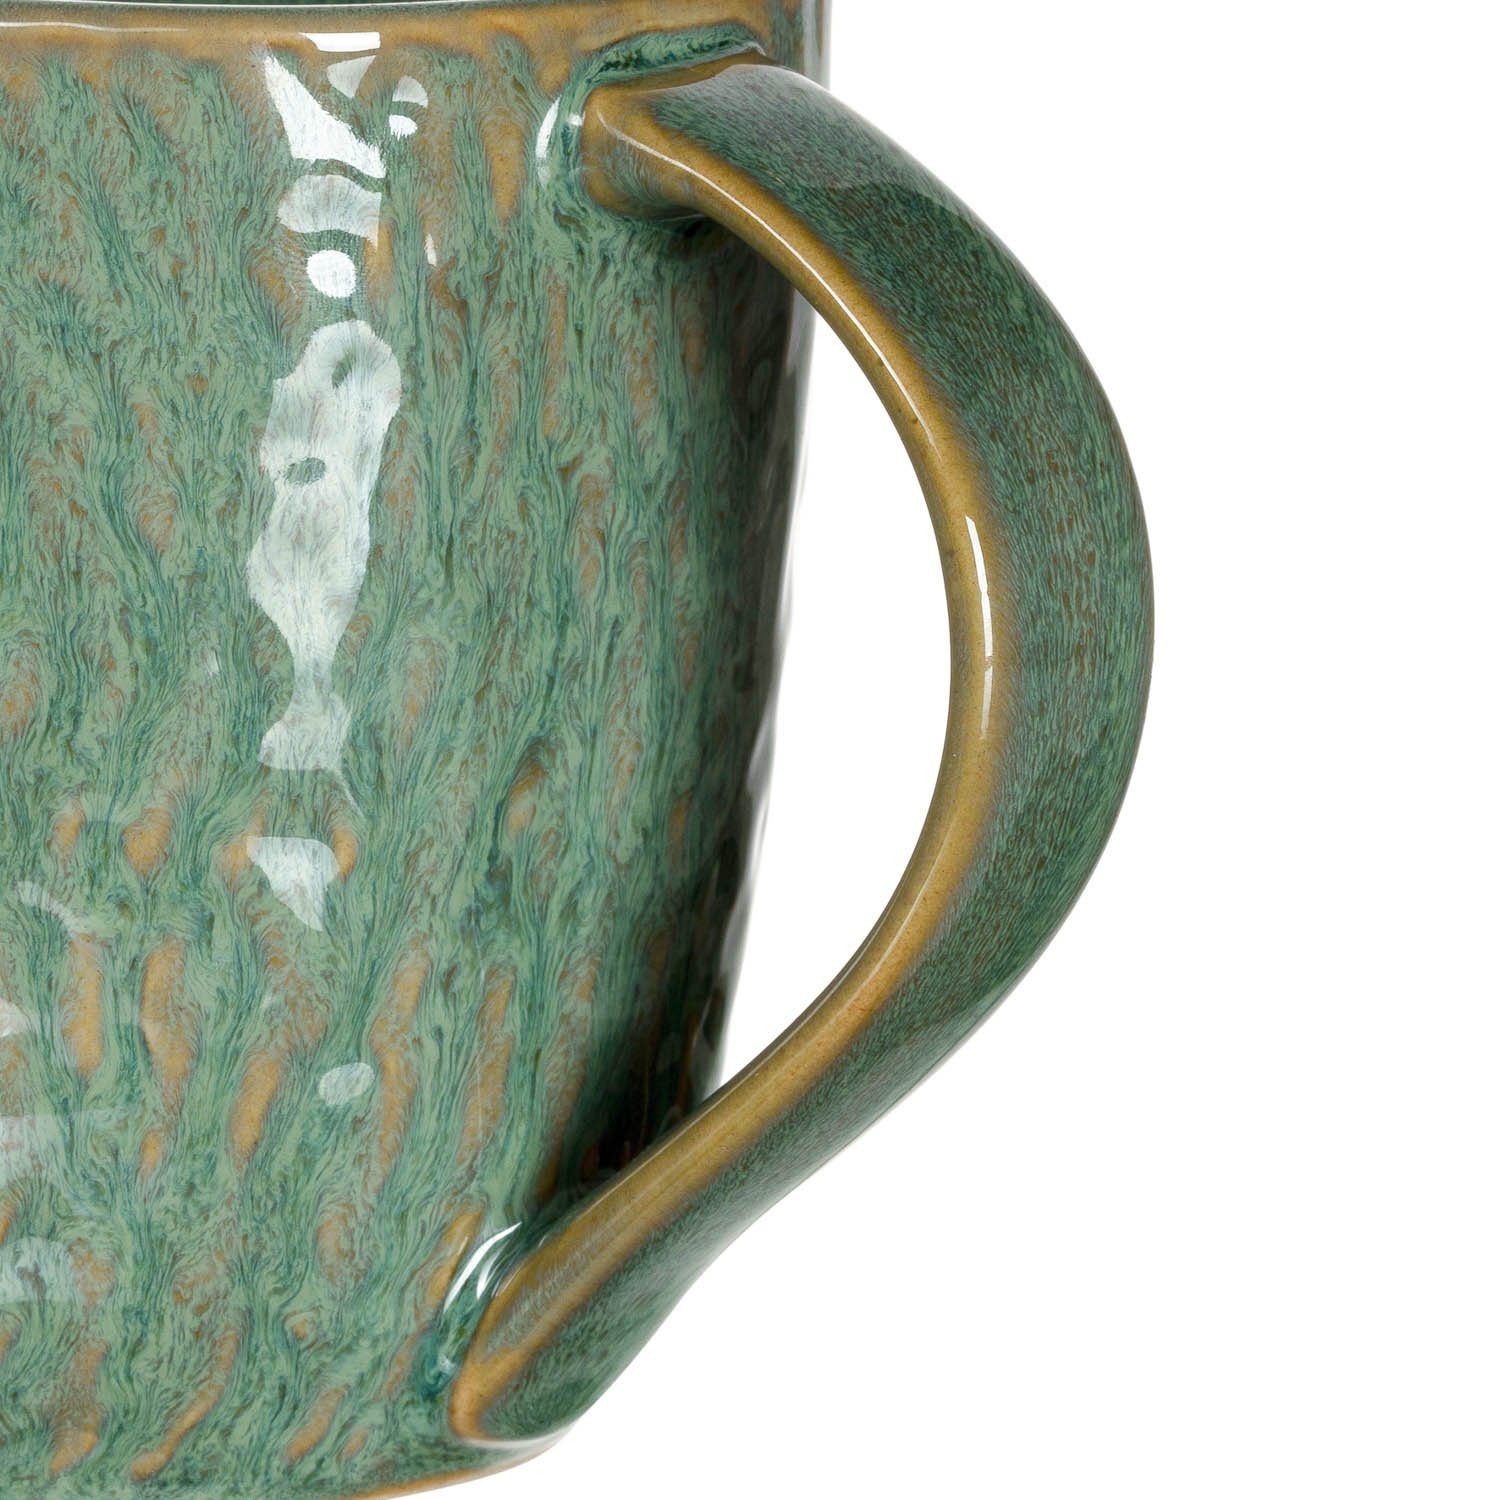 Becher 430 grün LEONARDO Keramik, 6-teilig Matera, ml,